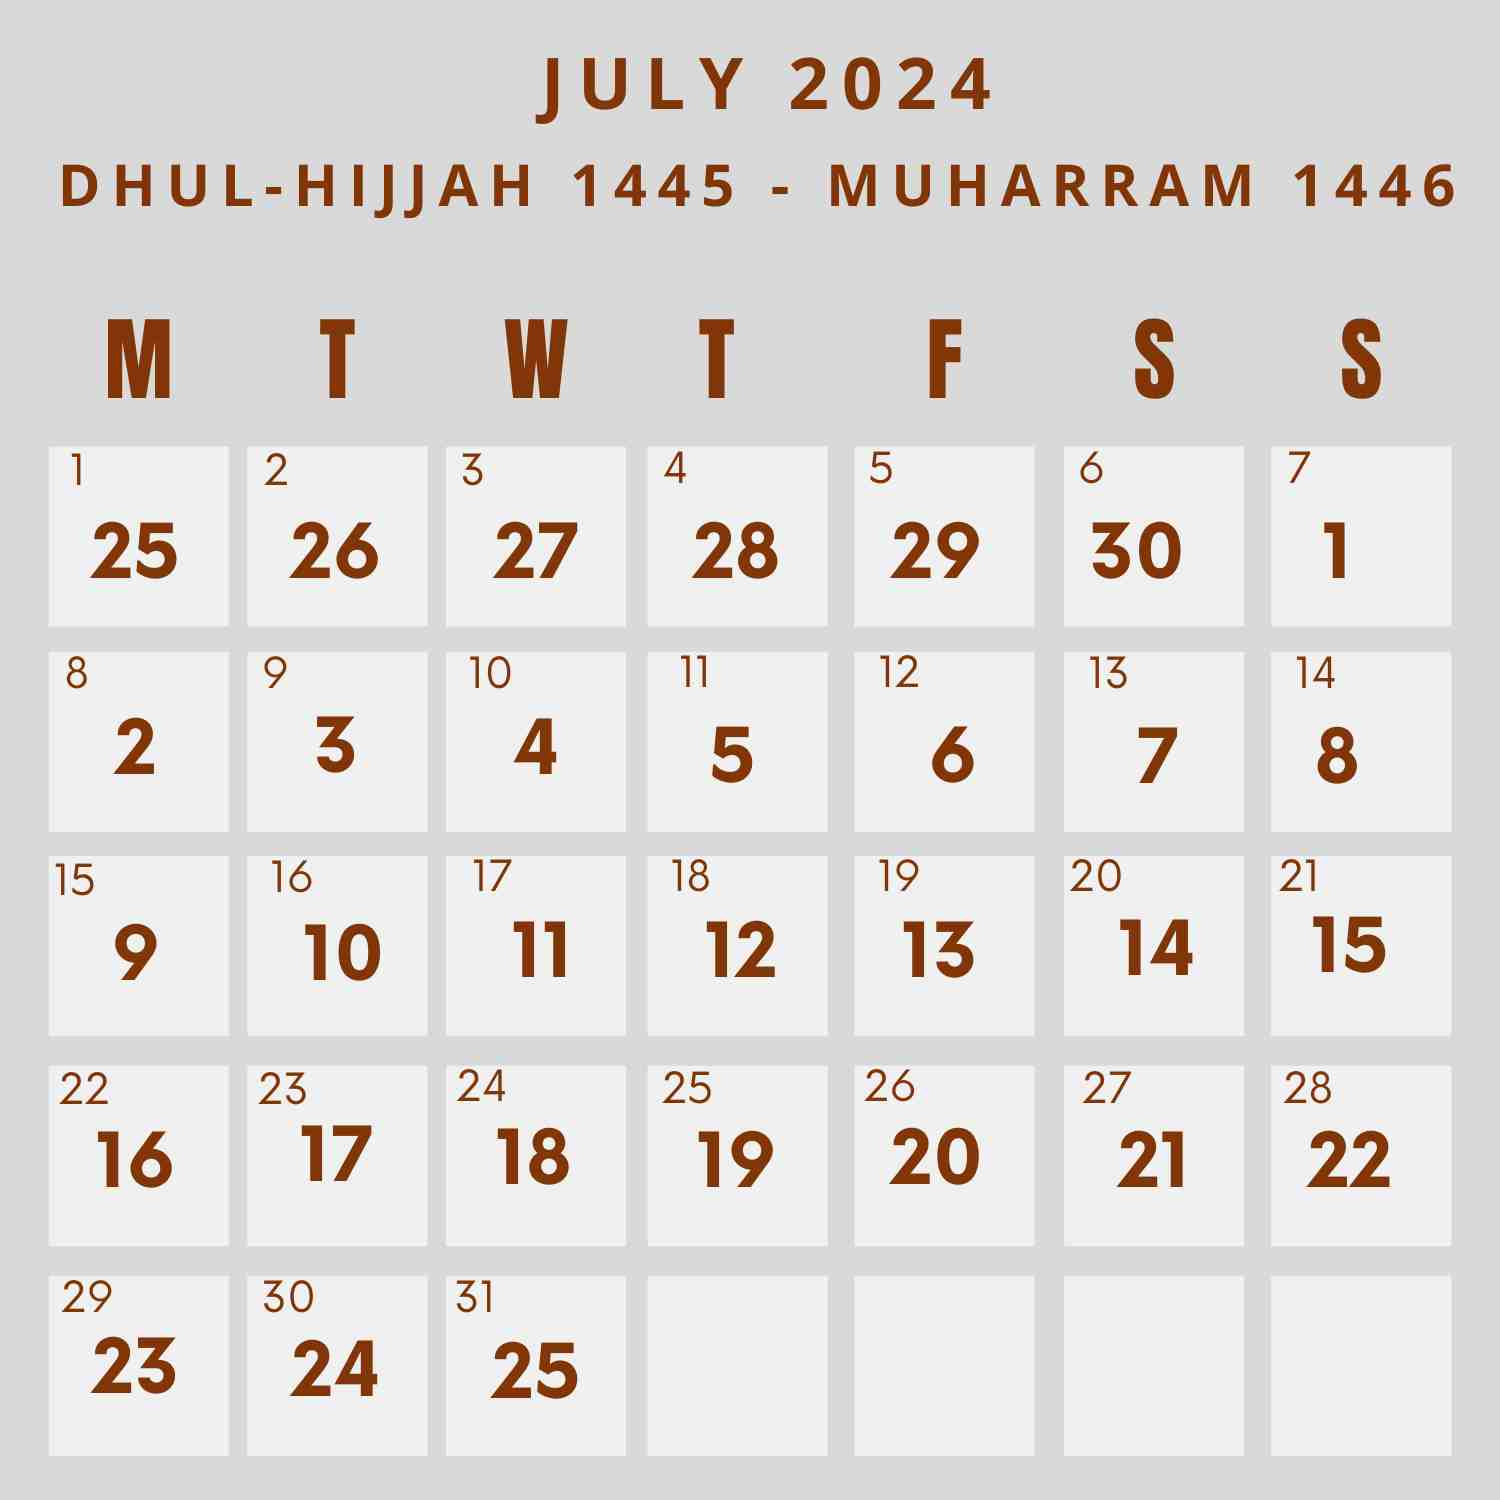 Islamic Calendar 2024 - Khwajadarbar throughout 9 July 2024 in Islamic Calendar